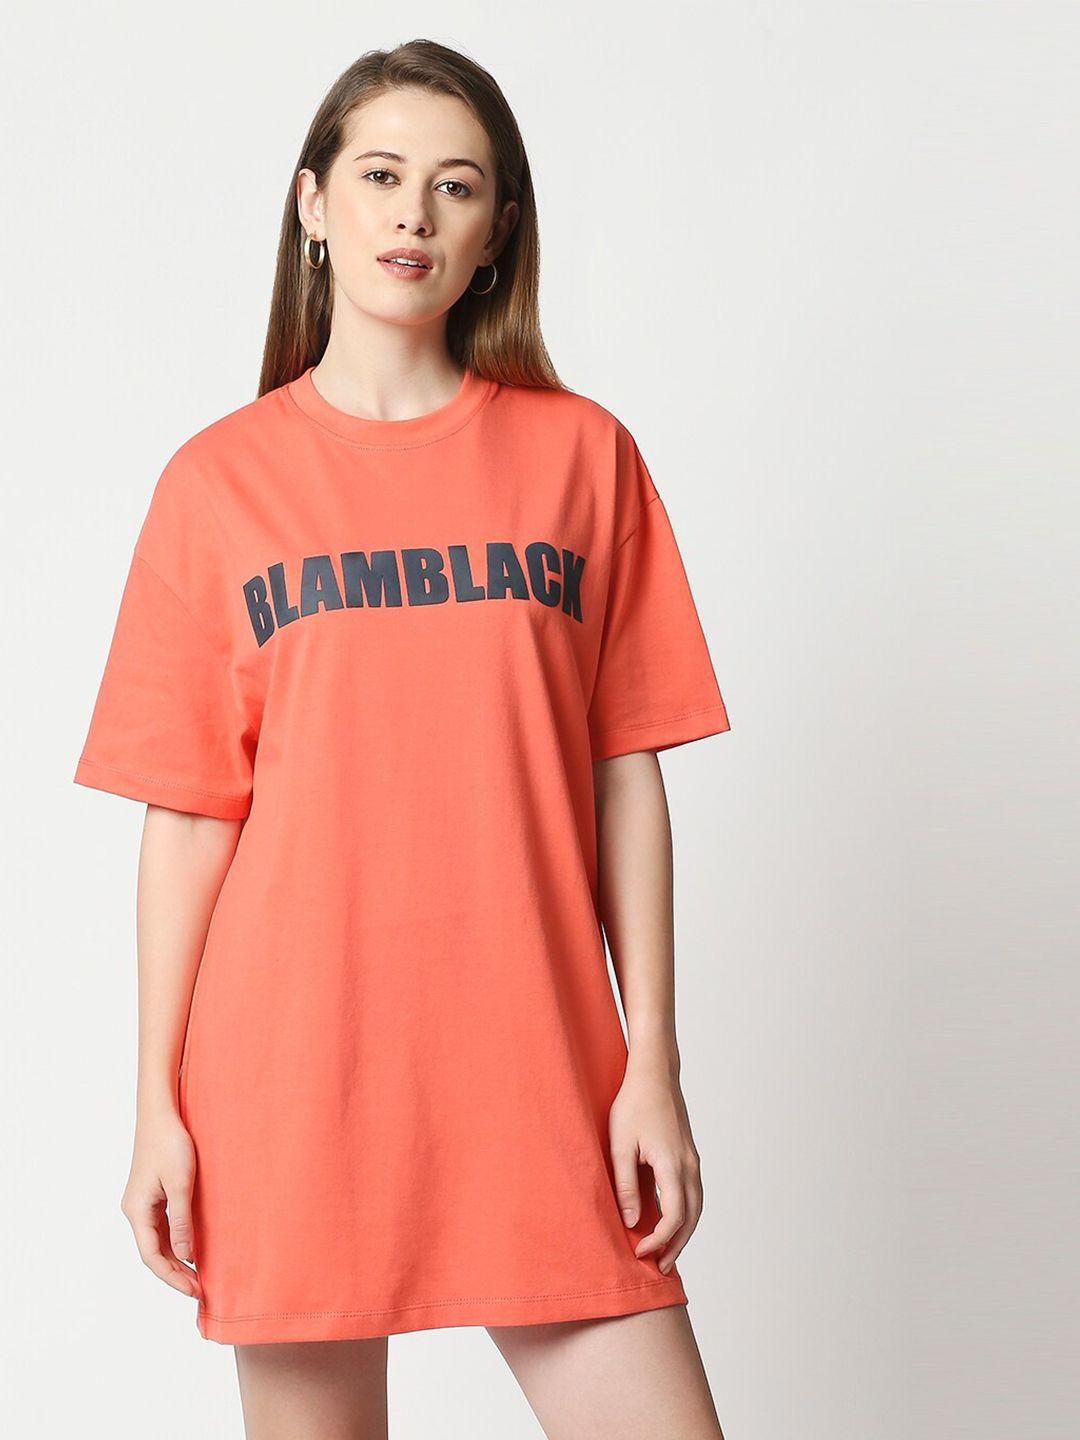 blamblack coral t-shirt mini dress